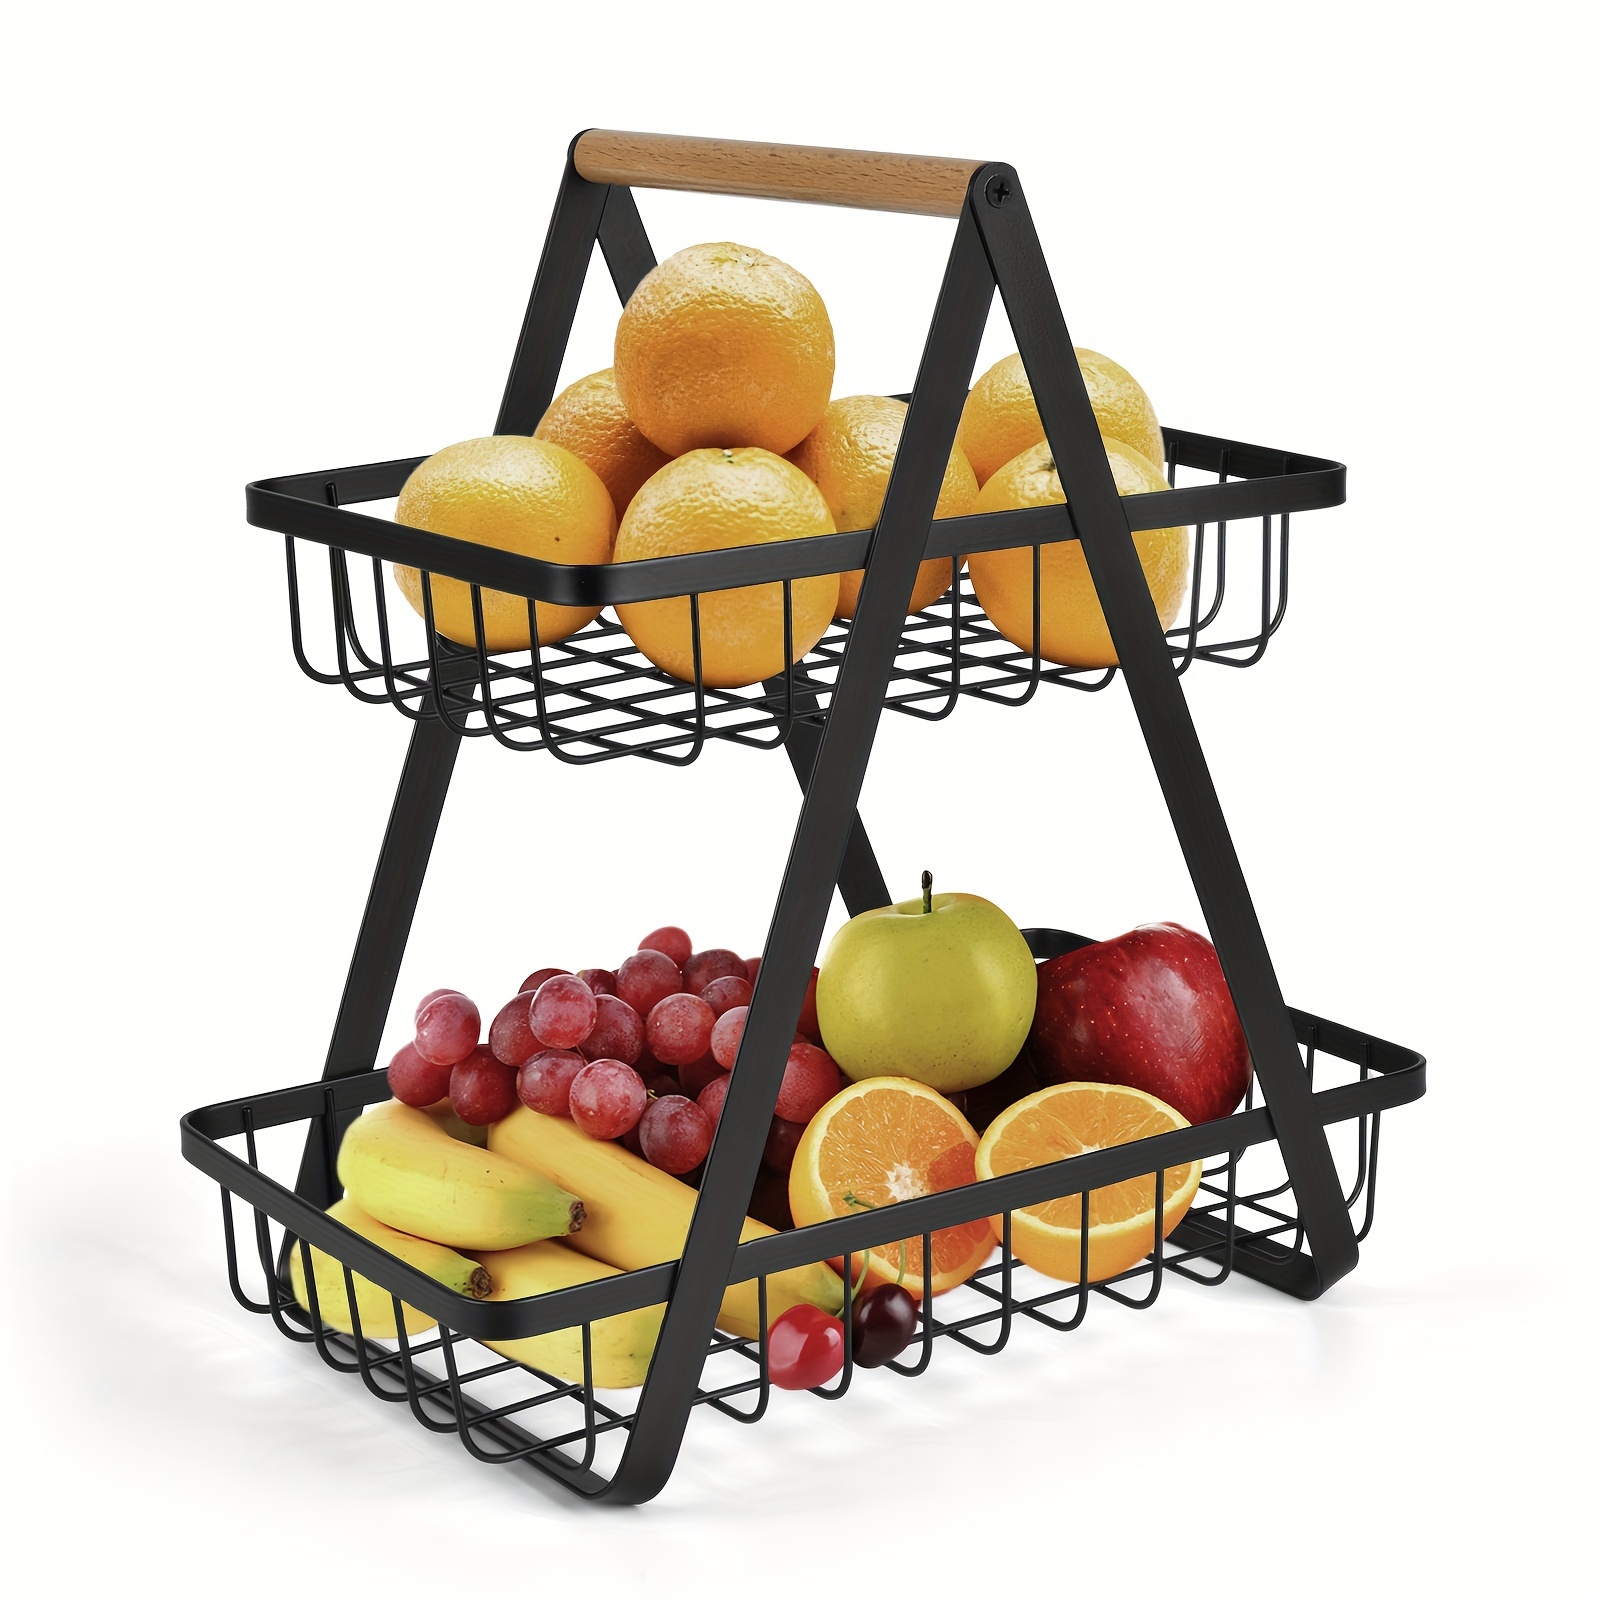  Cesta de almacenamiento de frutas y verduras para cocina, cesta  apilable de alambre de metal de 6 niveles con ruedas rodantes, estante de  frutas, organizador de aperitivos para despensa, baño, 